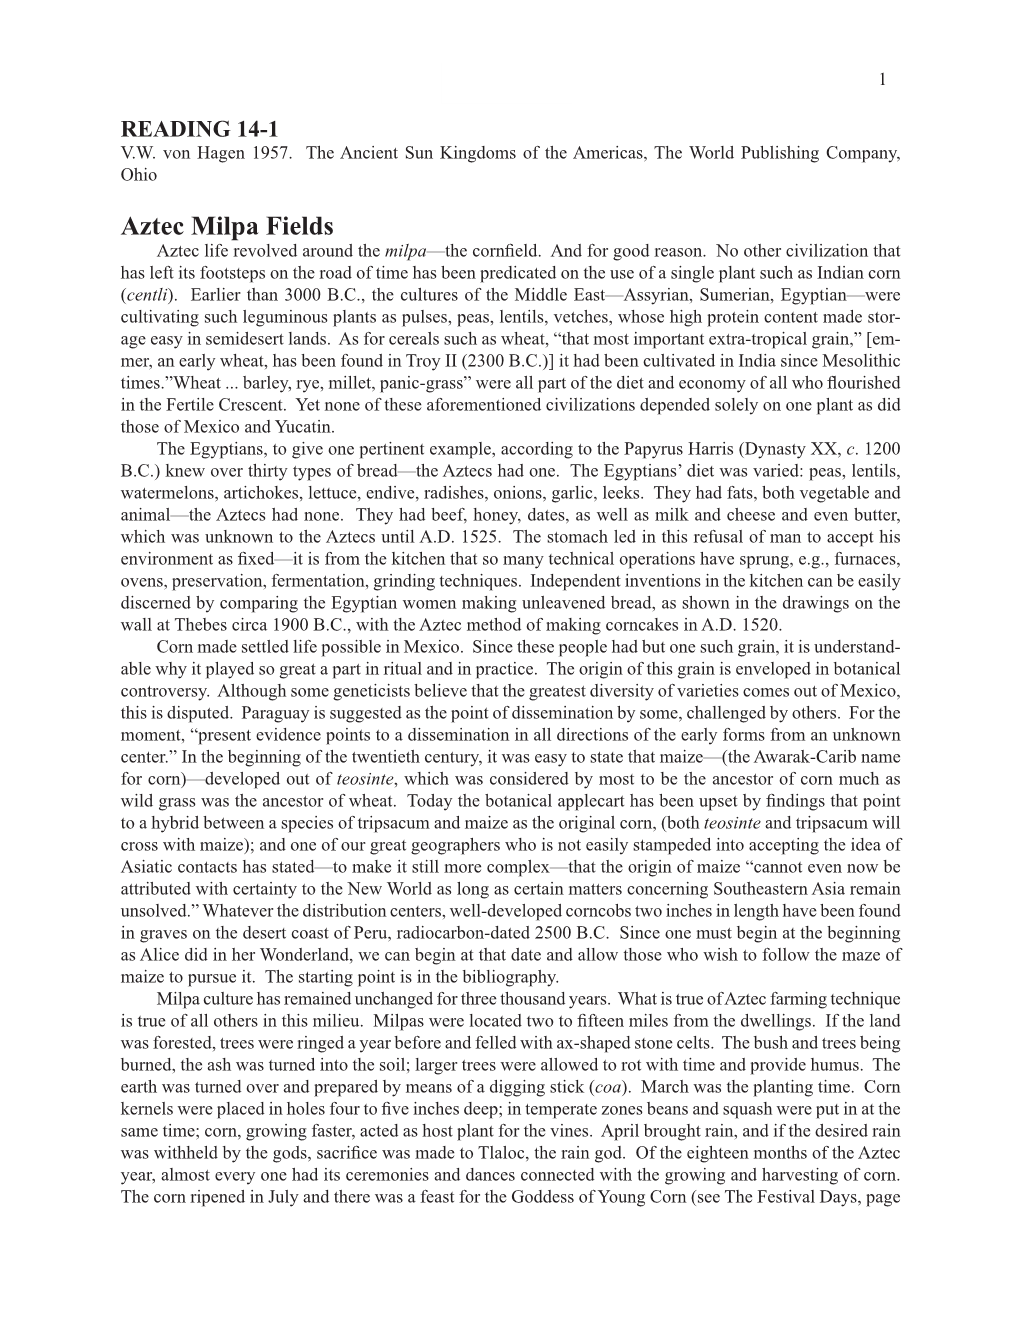 Aztec Milpa Fields Aztec Life Revolved Around the Milpa—The Cornﬁ Eld